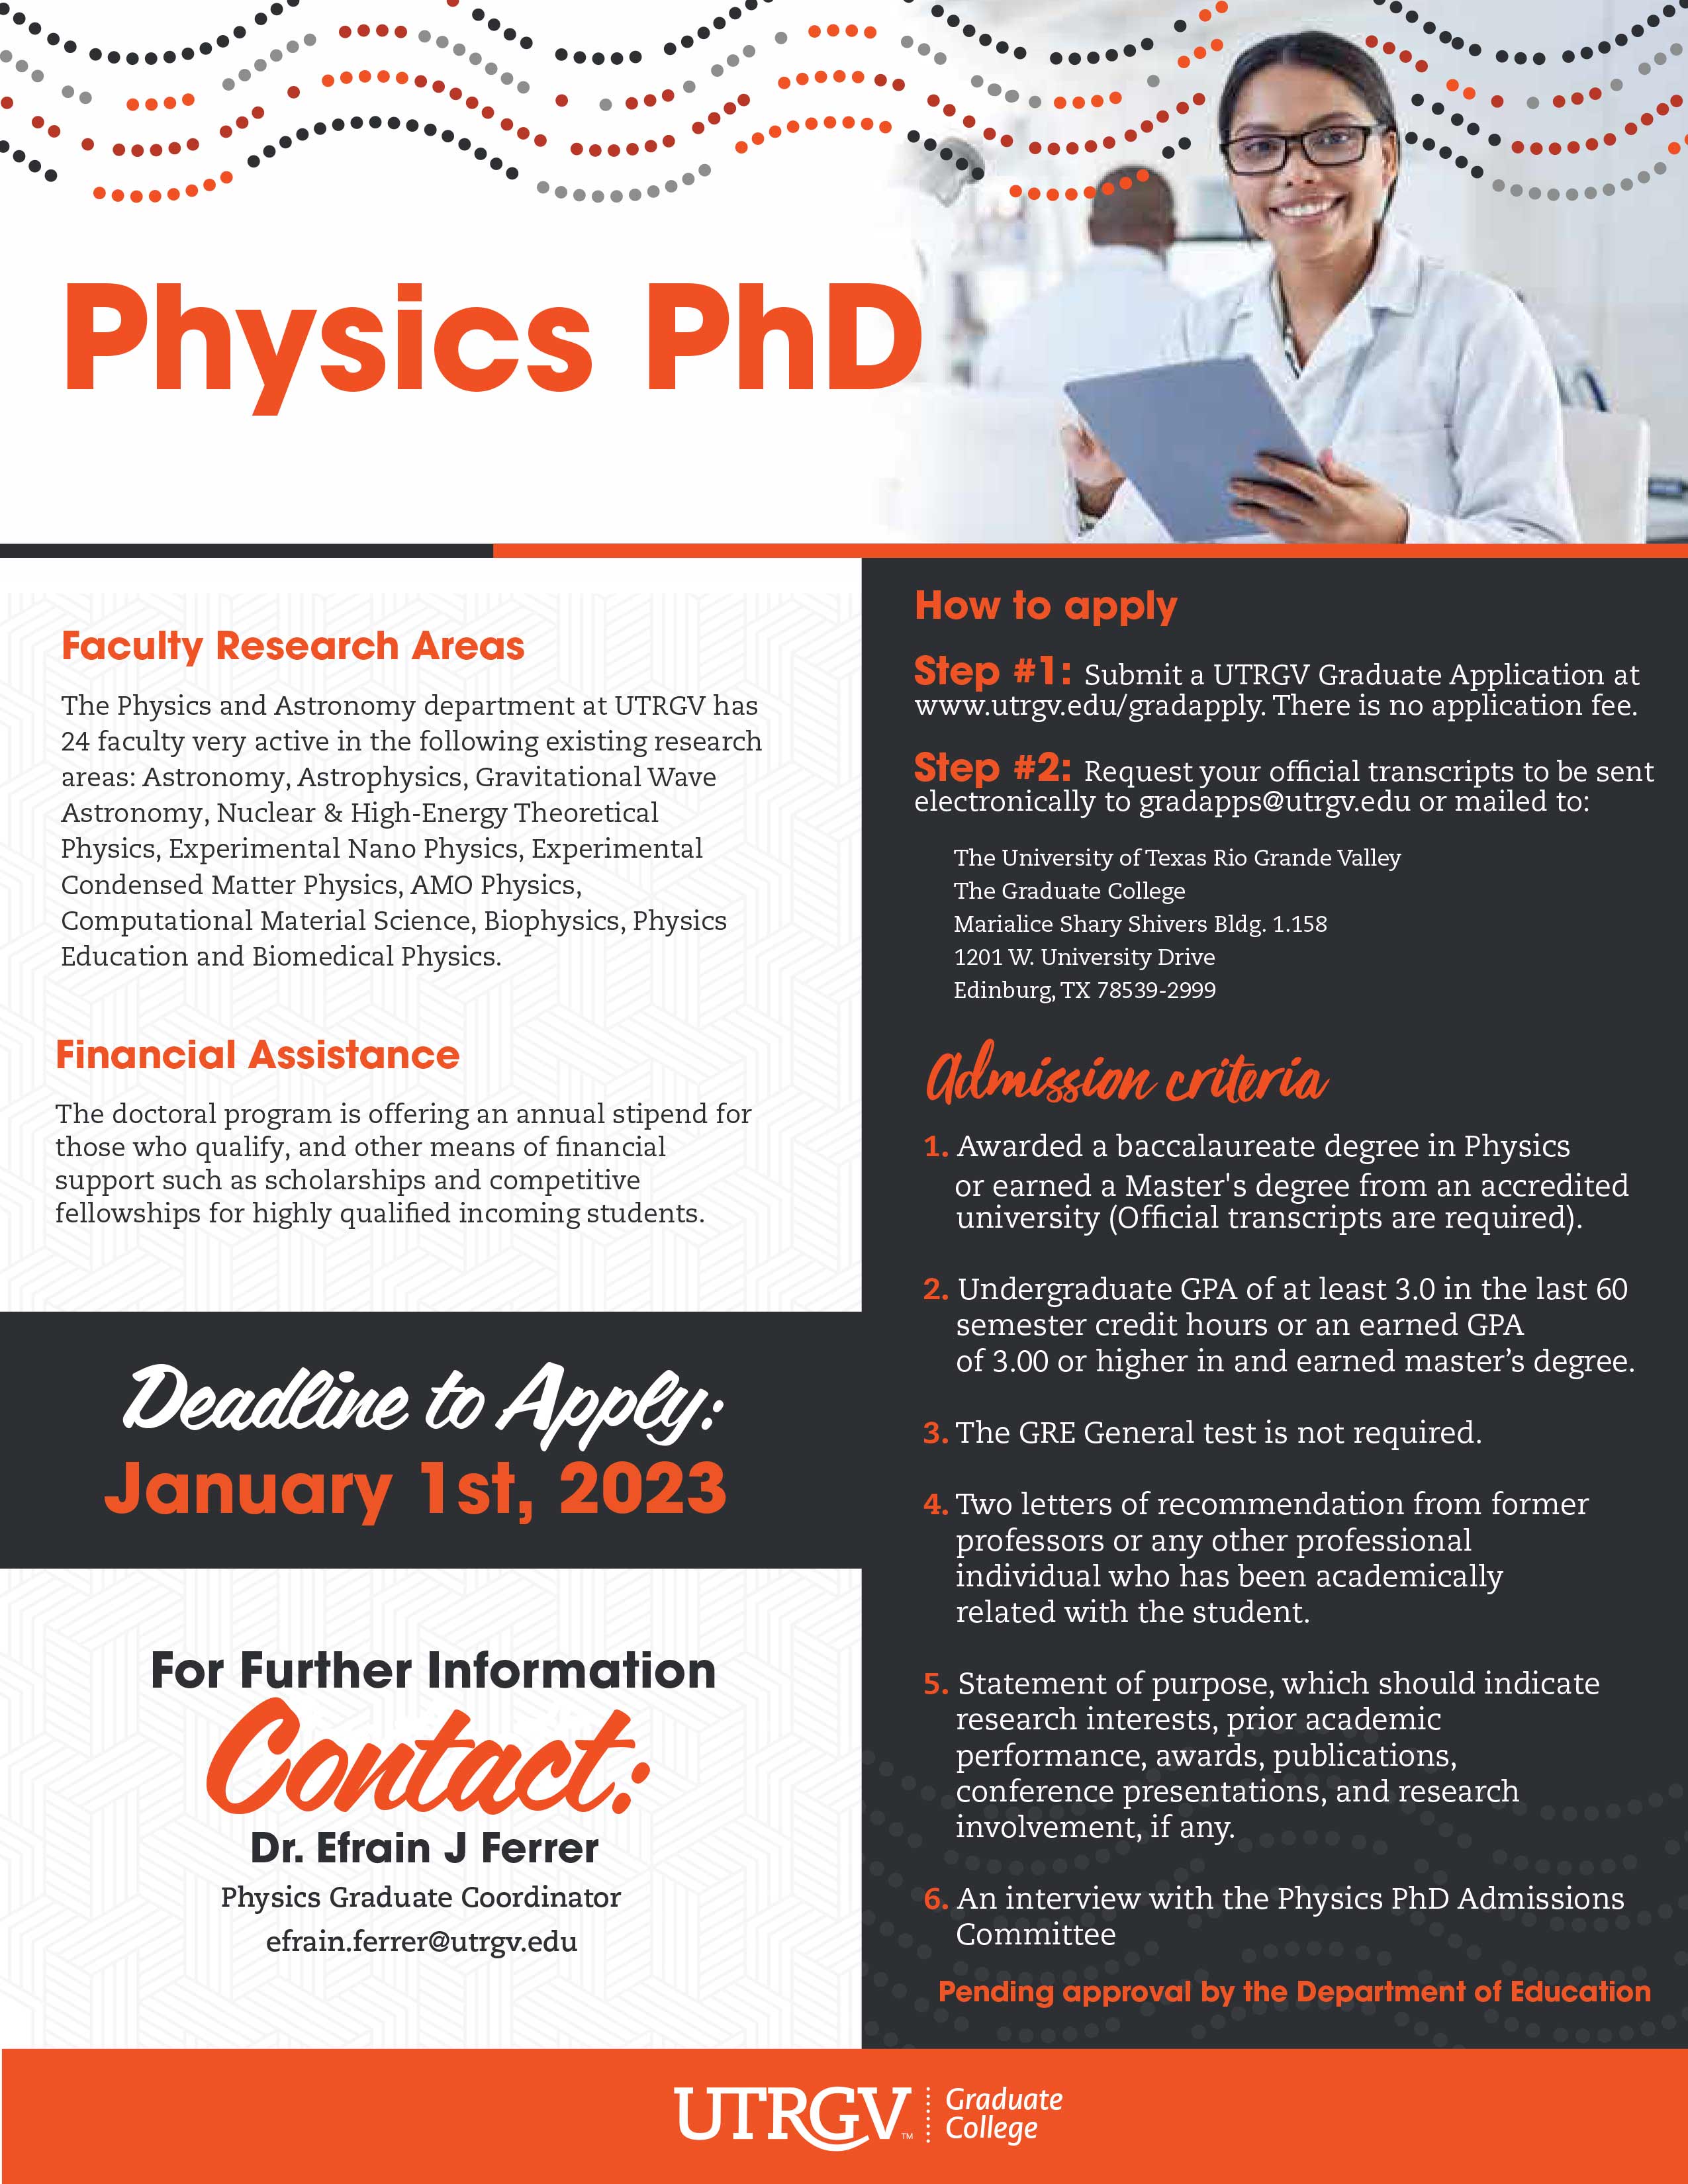 phd vacancies in physics